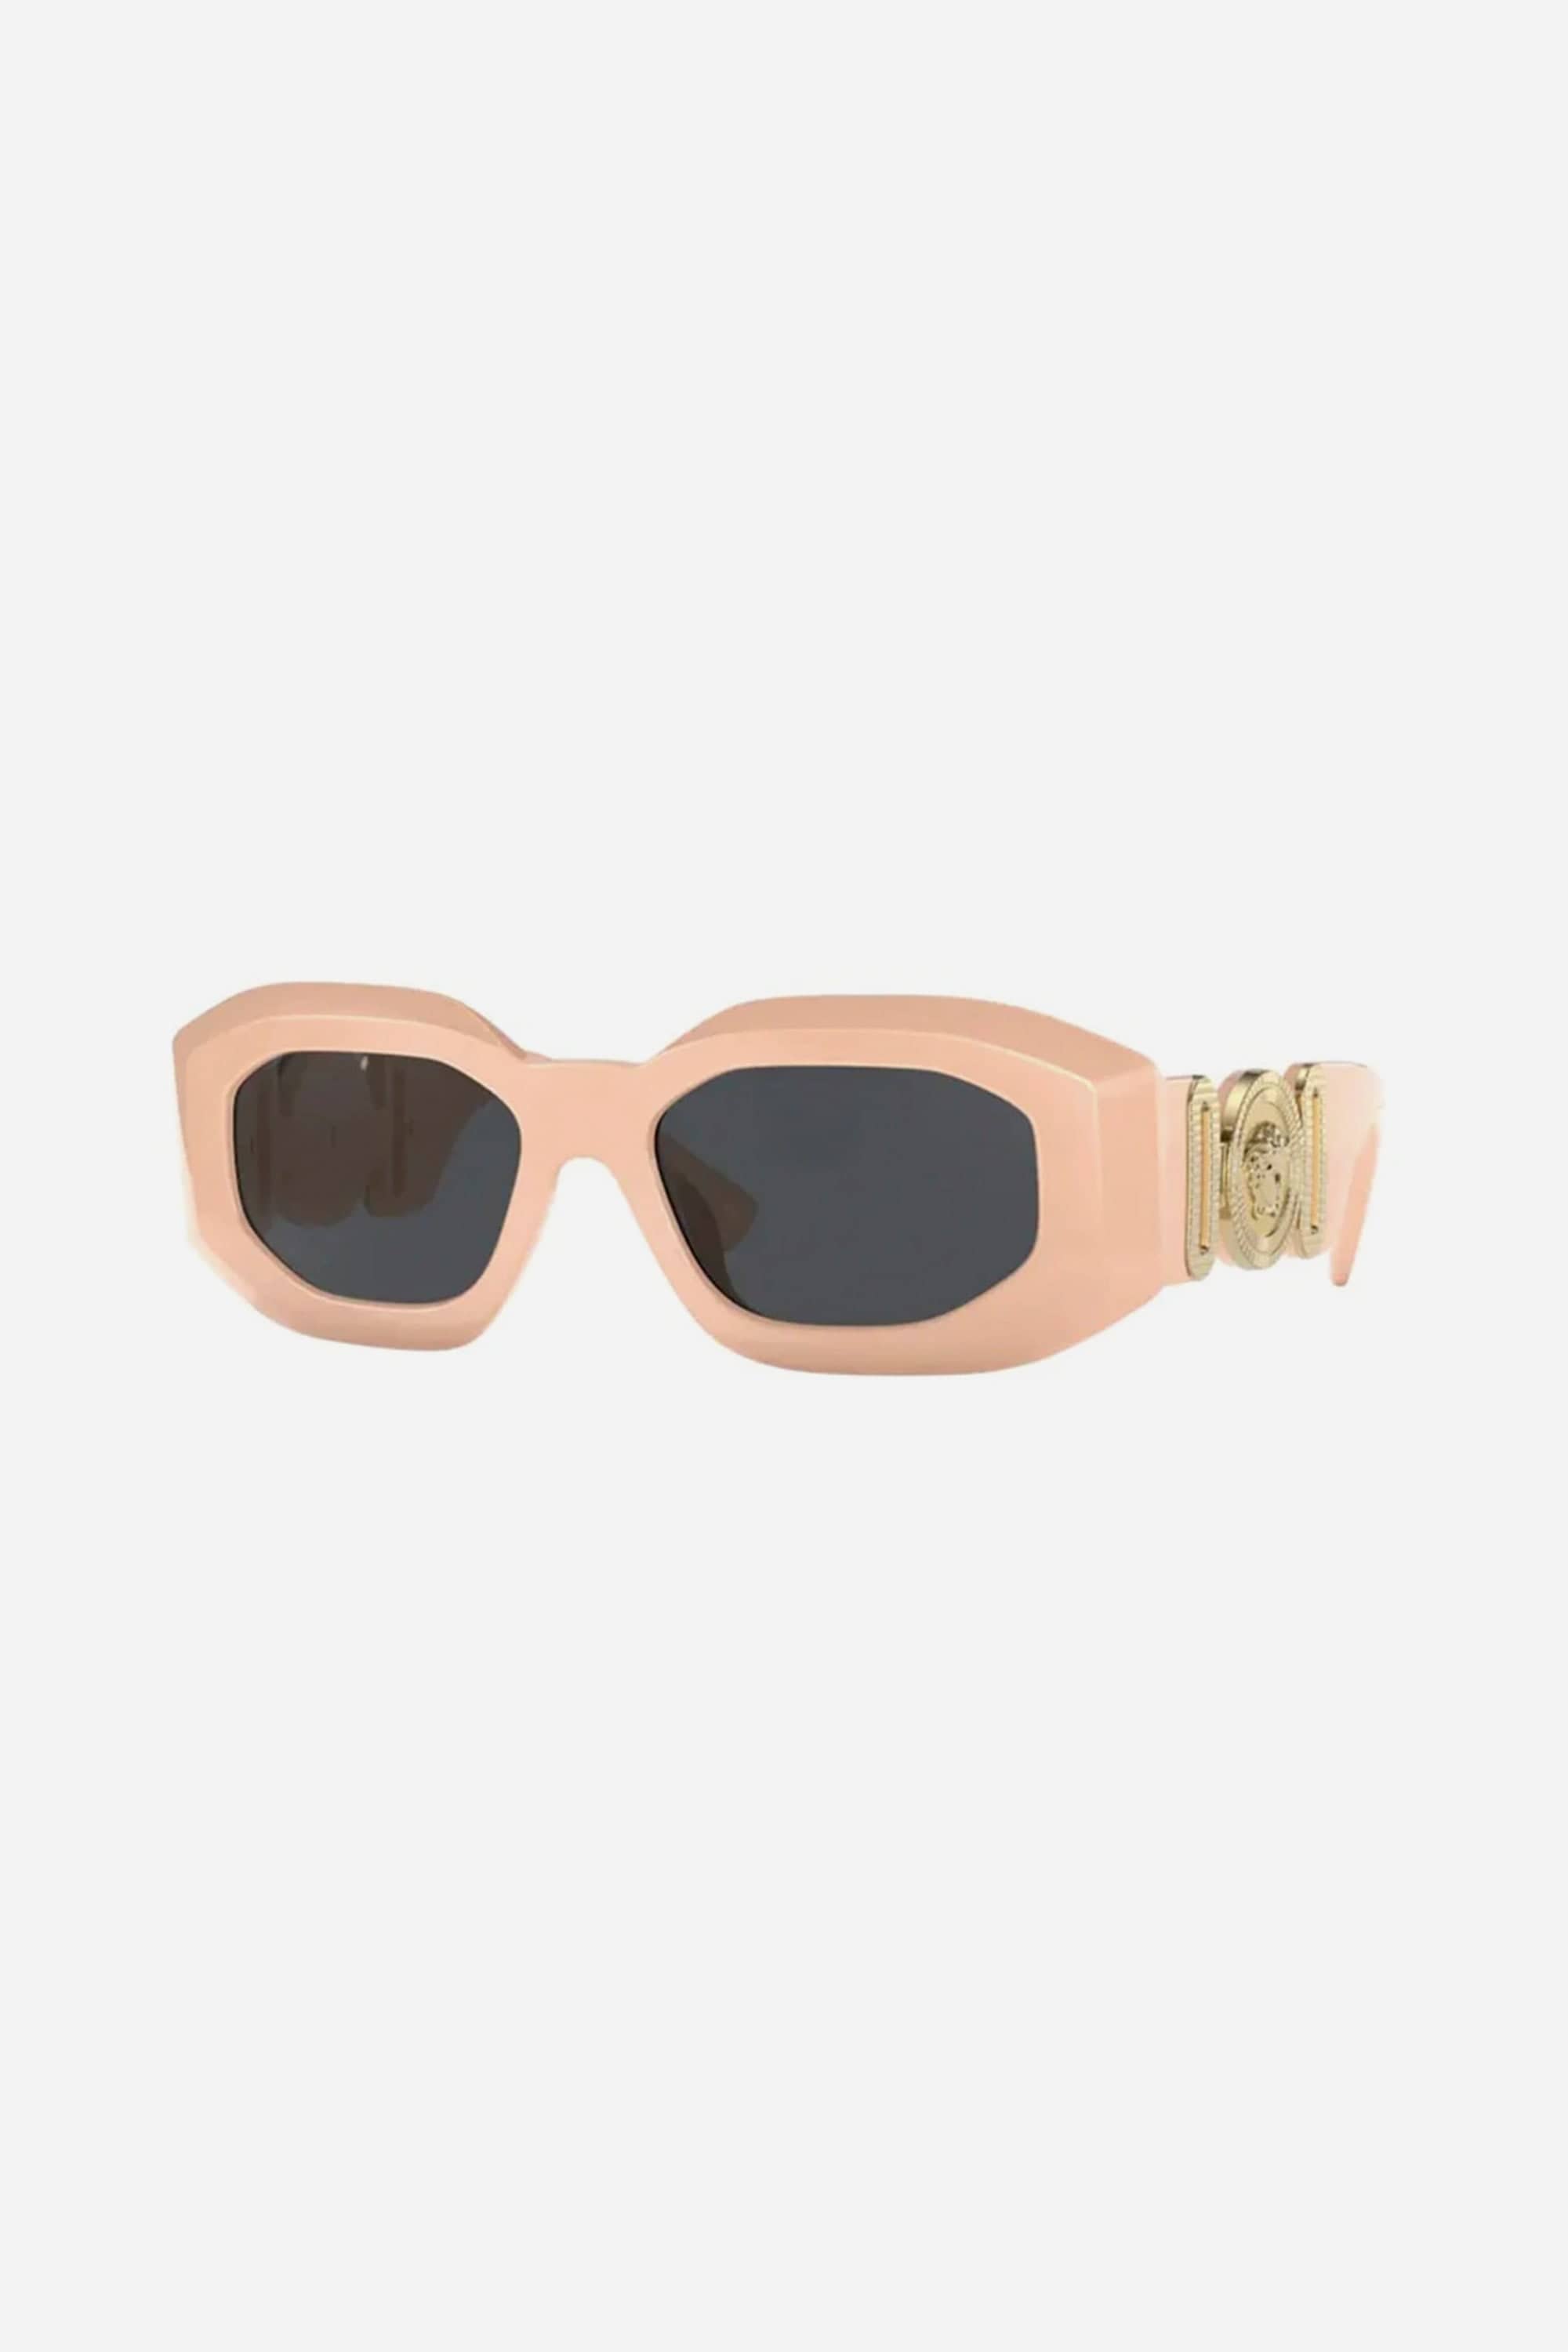 Versace light pink sunglasses with iconic jellyfish - Eyewear Club